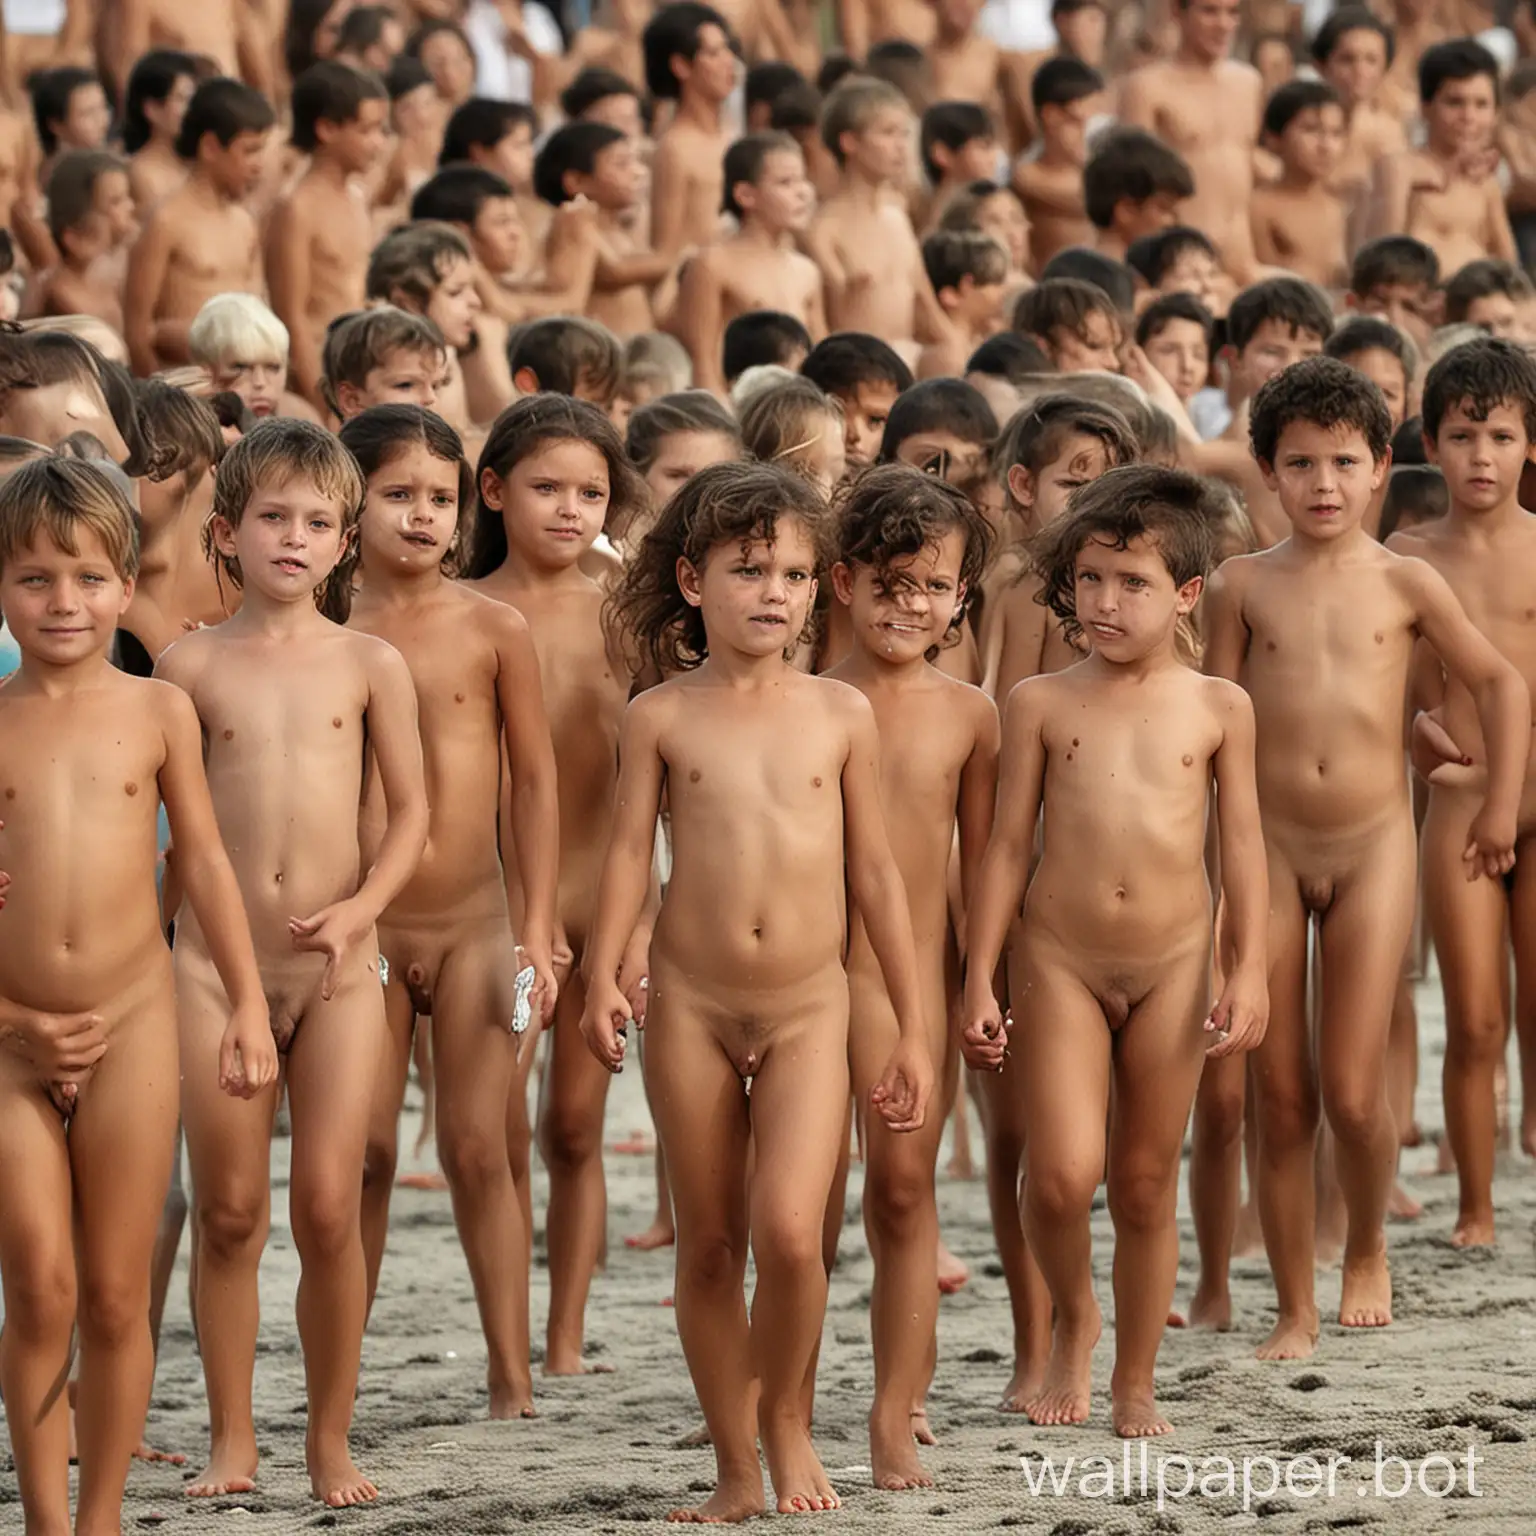 Beach parade of nudist children in Brazil